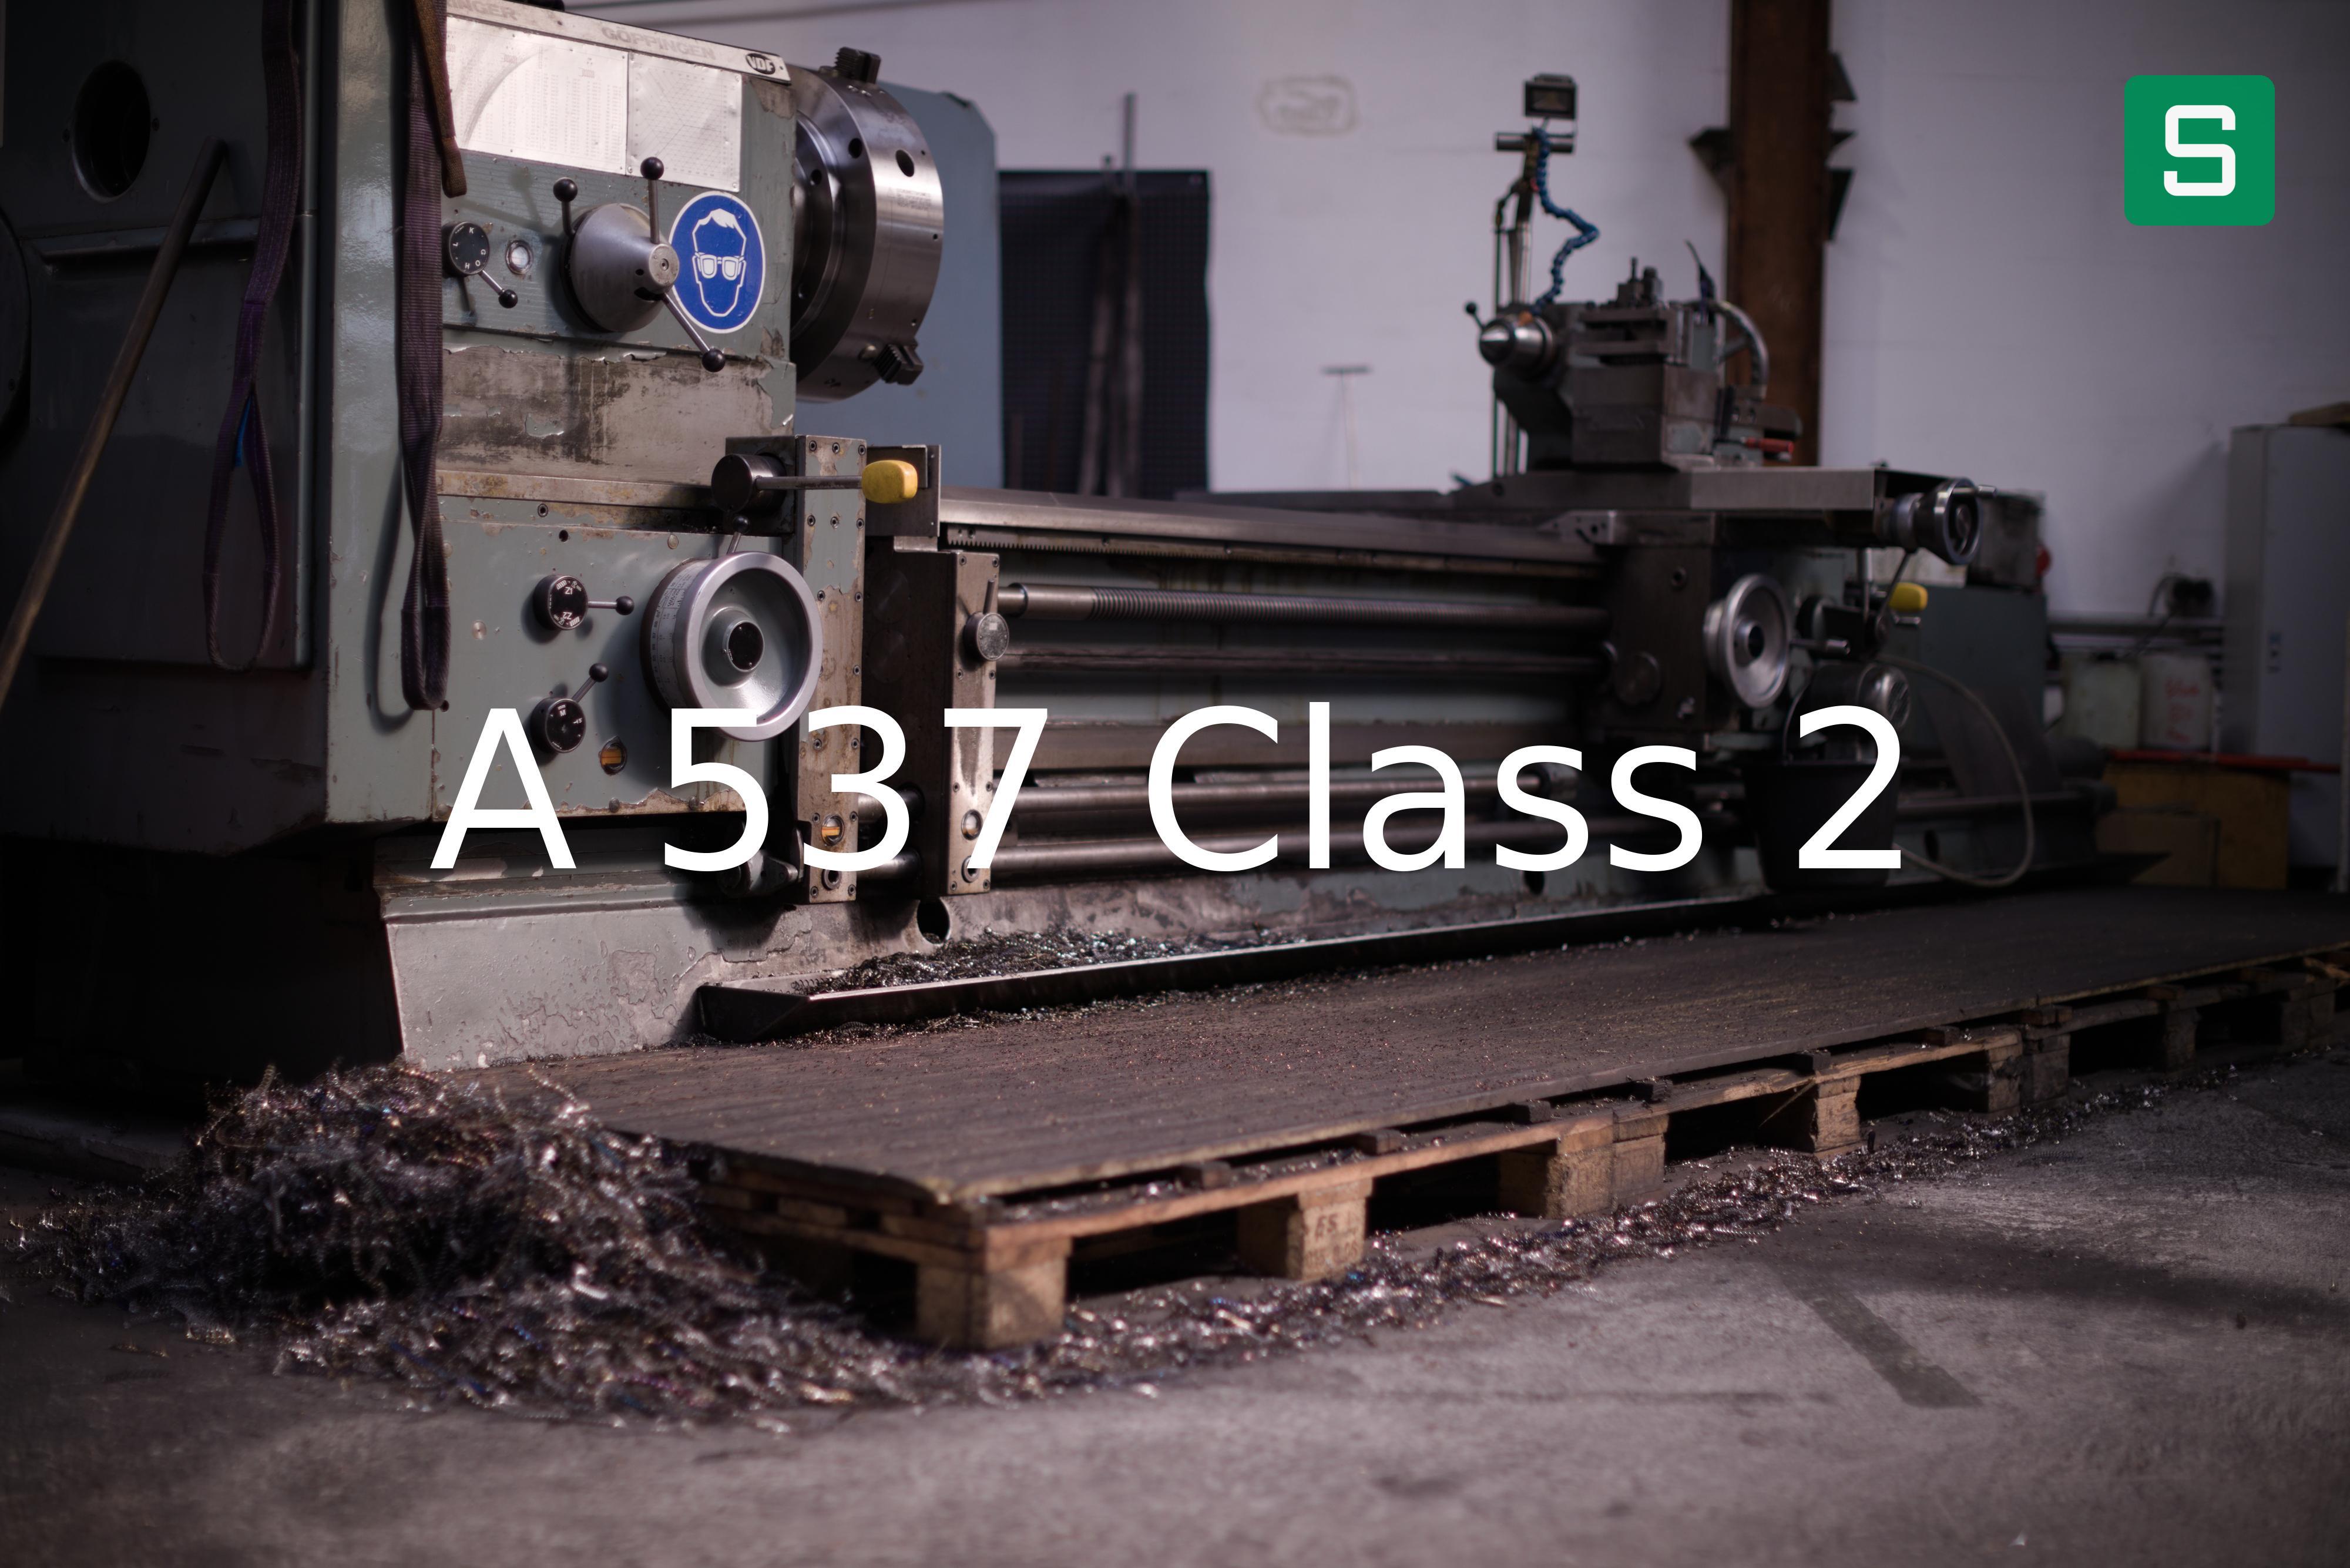 Steel Material: A 537 Class 2